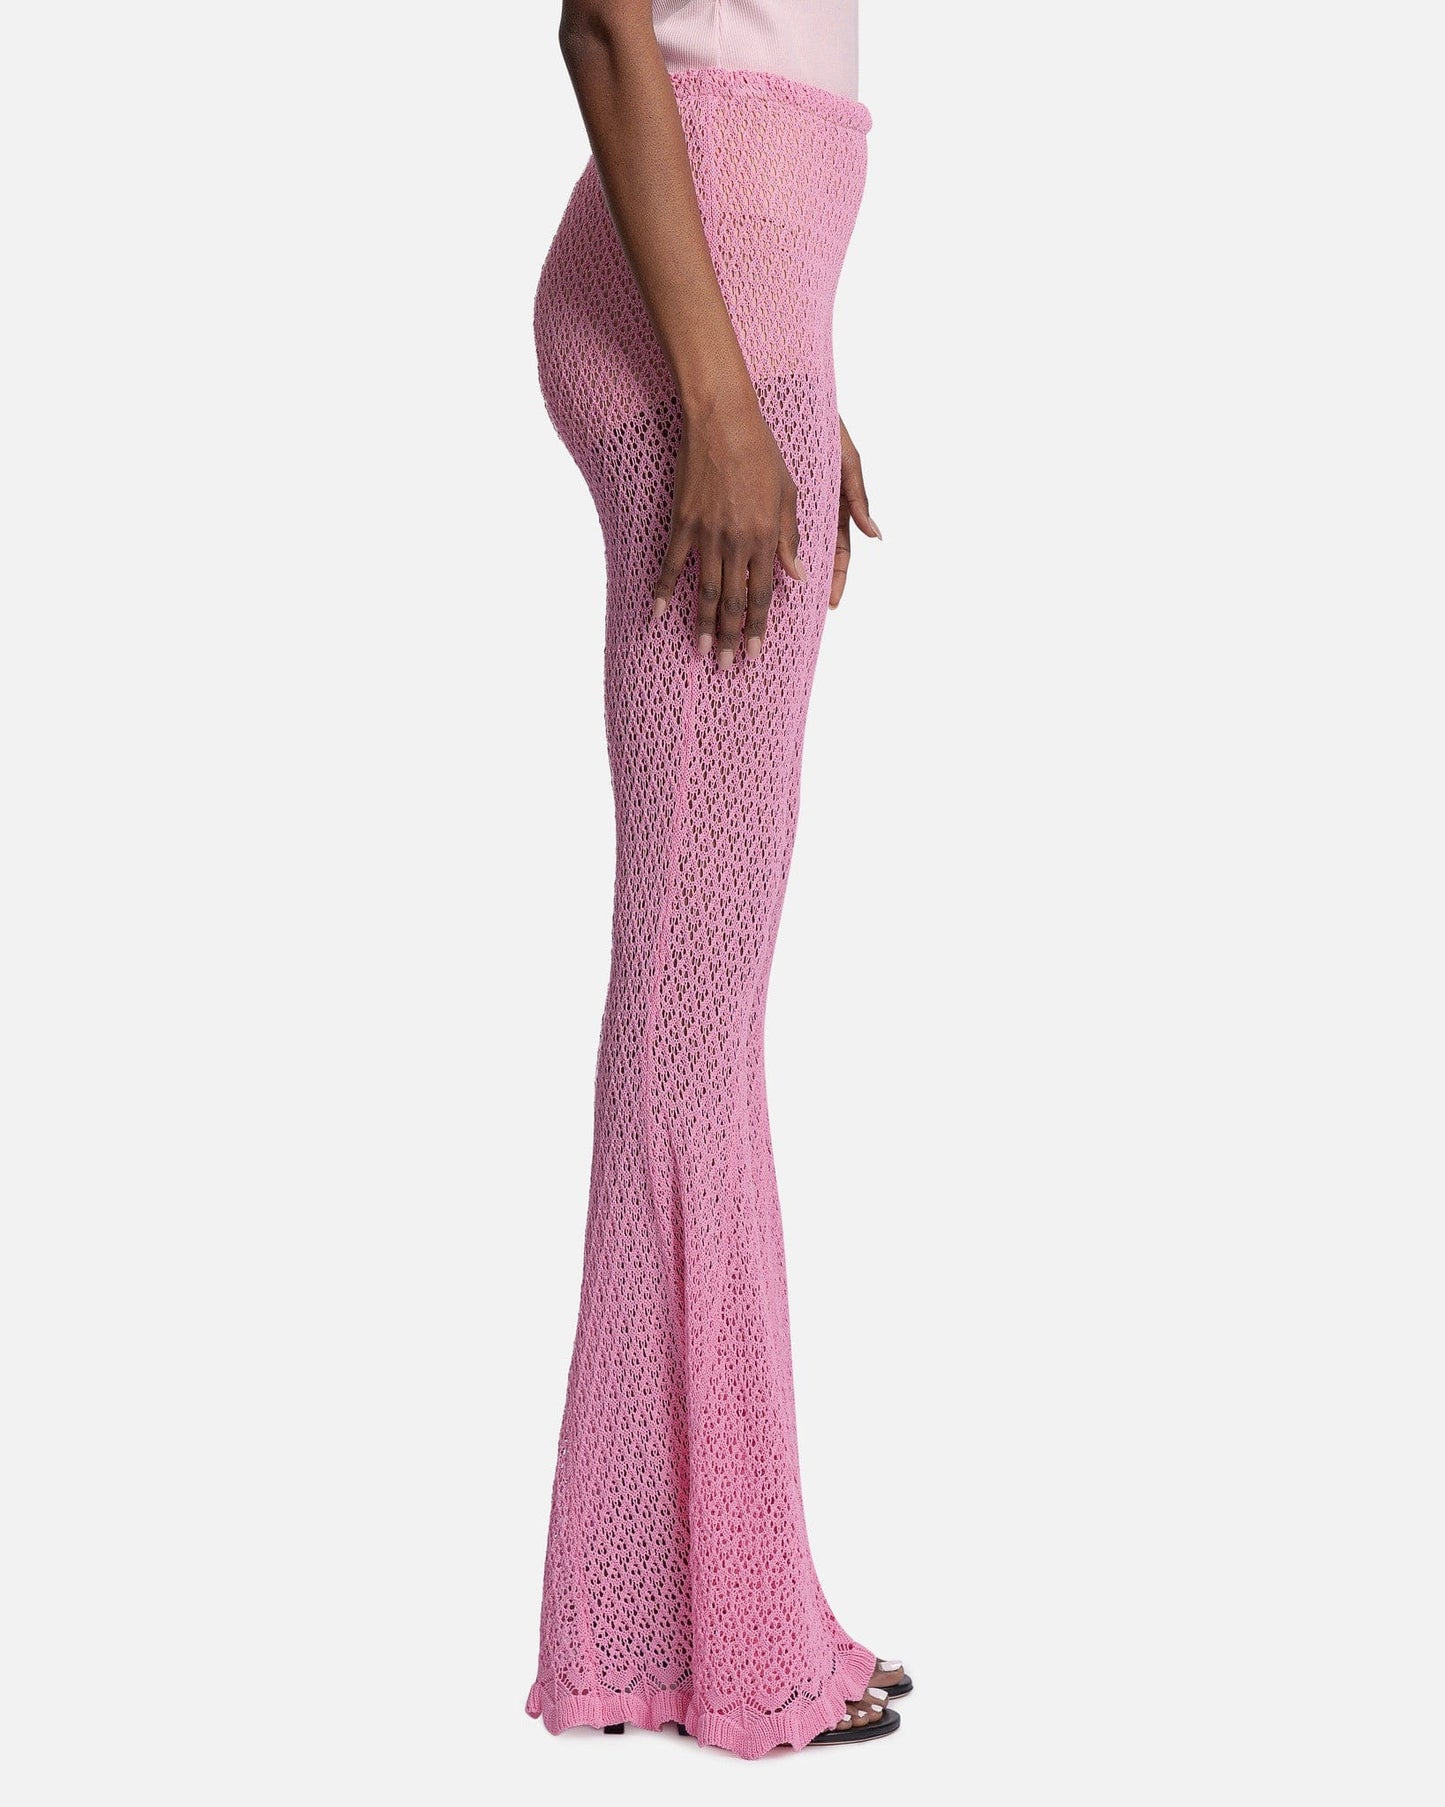 Blumarine Women Pants Crochet-Knit Scallop Edge Pants in Bubblegum